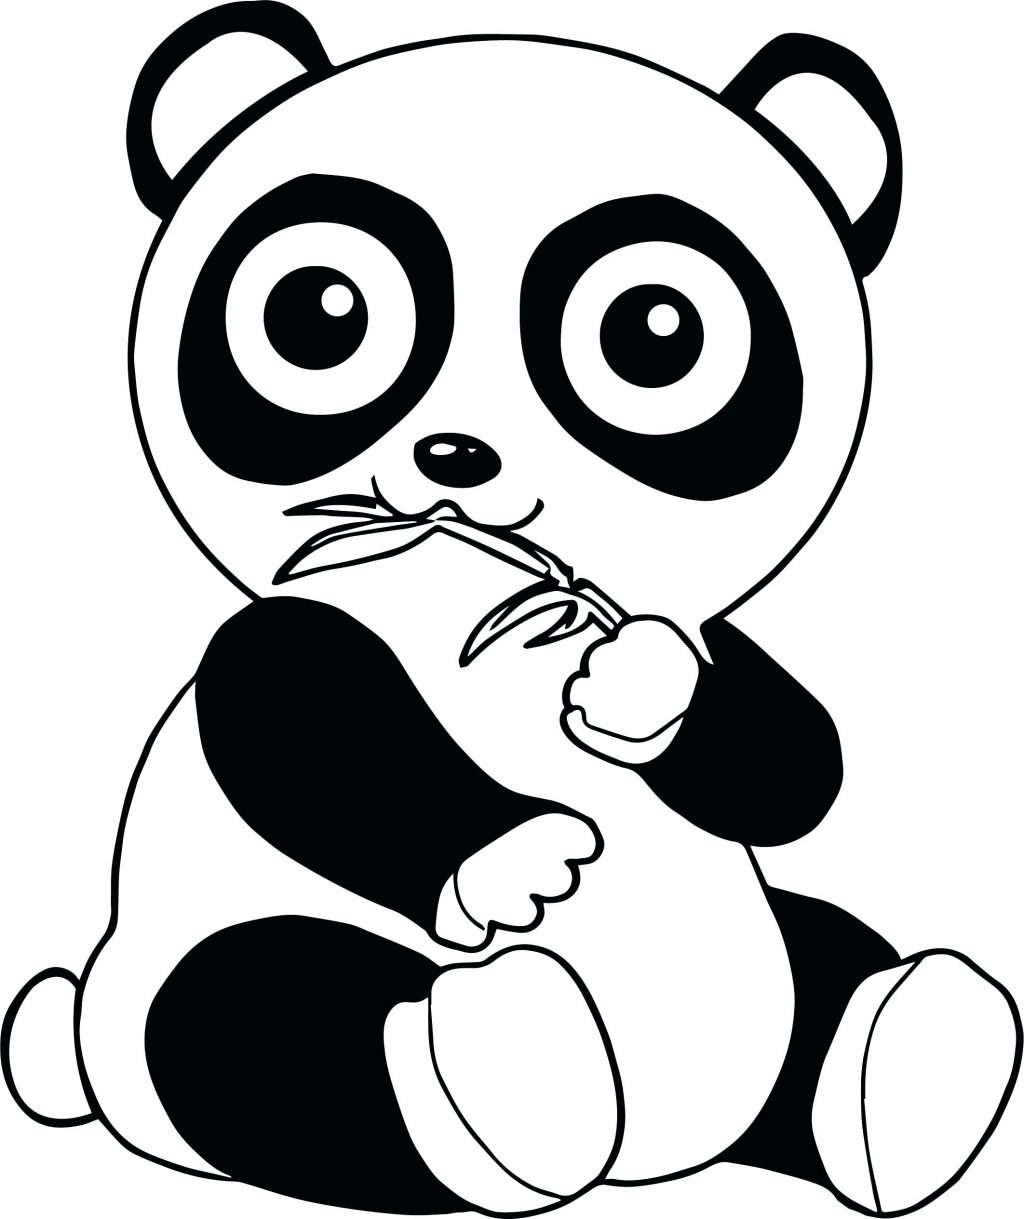 Panda Coloring Pages at Free printable colorings